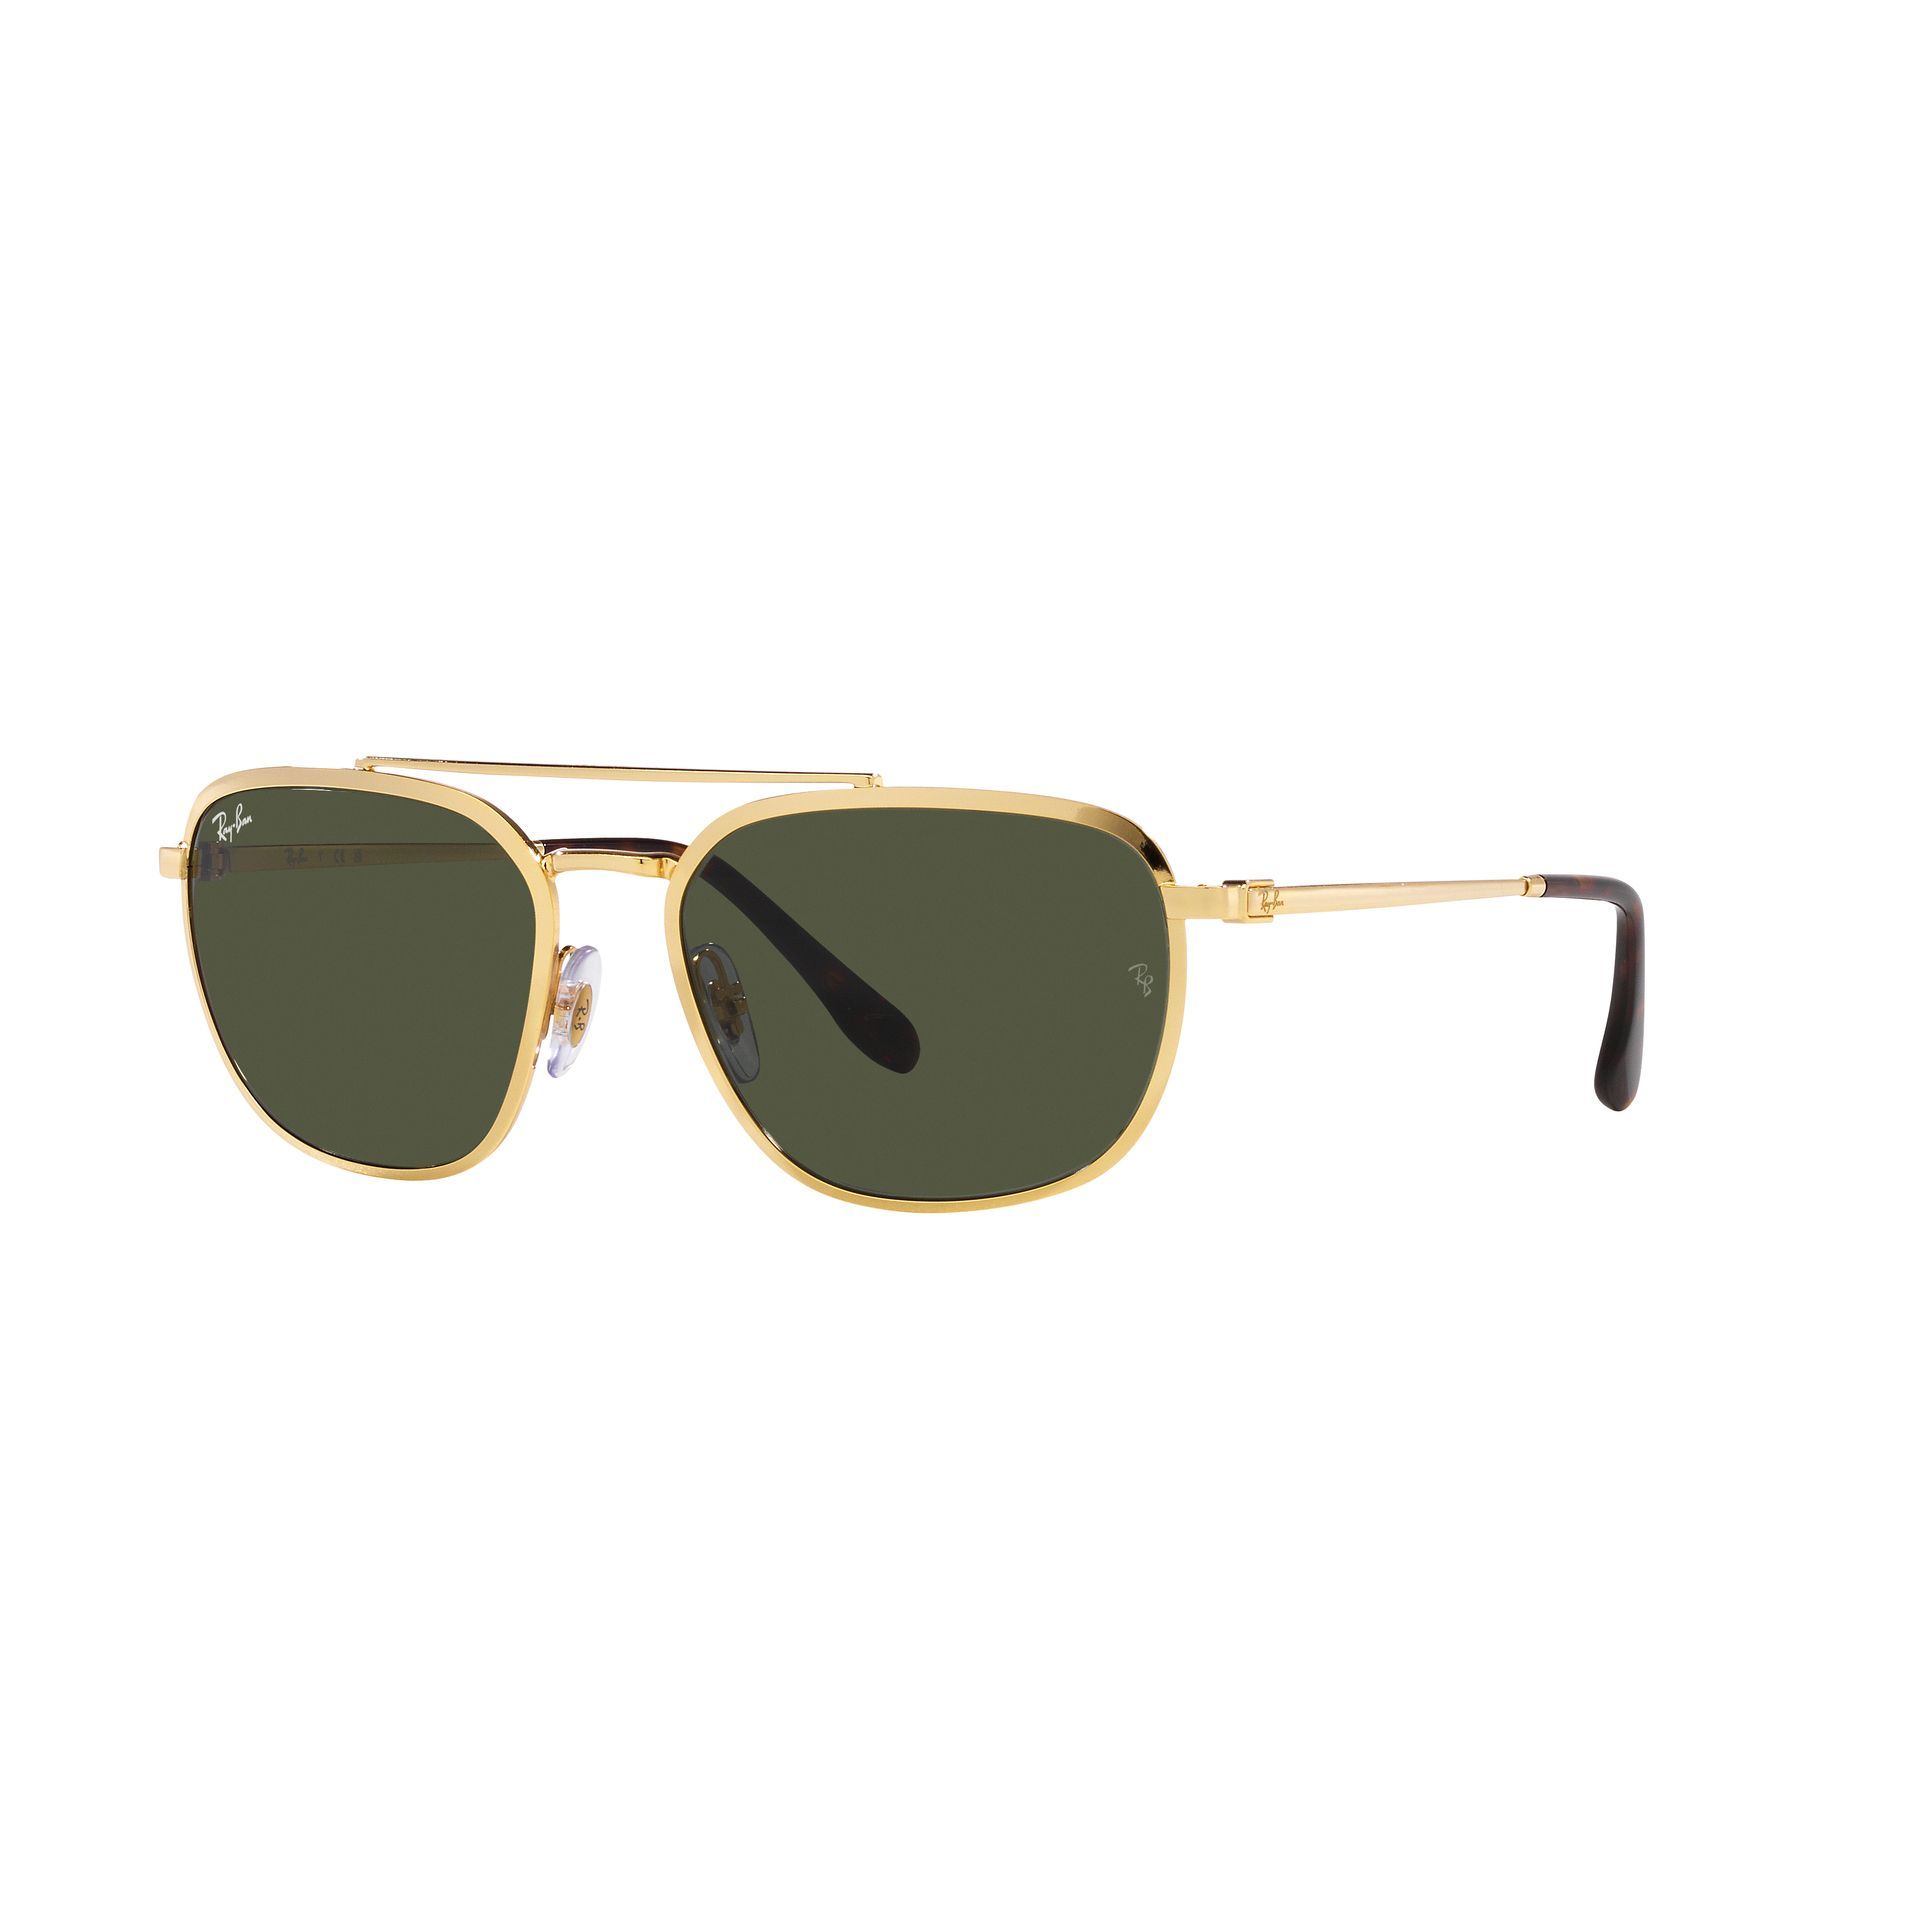 0RB3708 Square Sunglasses 001 31 - size 56